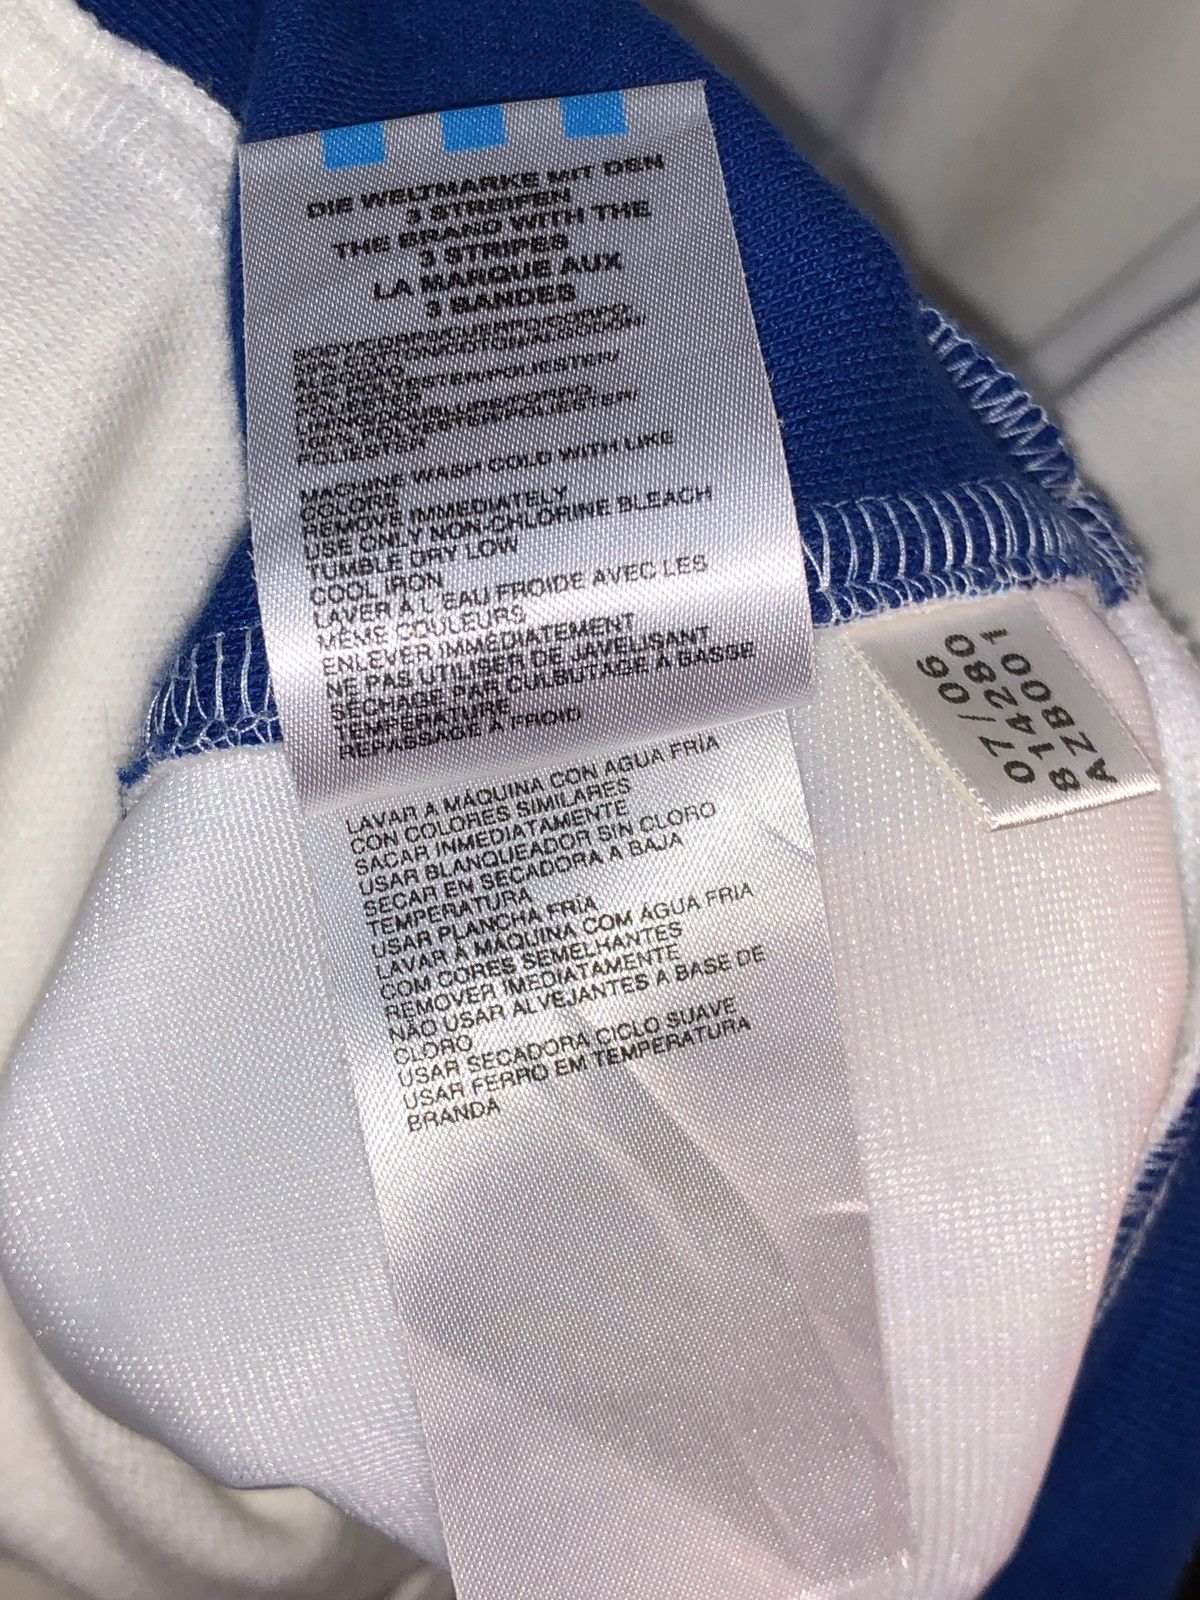 Adidas Rare Adidas San Juan Puerto Rico Track Tops Jacket Size US L / EU 52-54 / 3 - 6 Preview